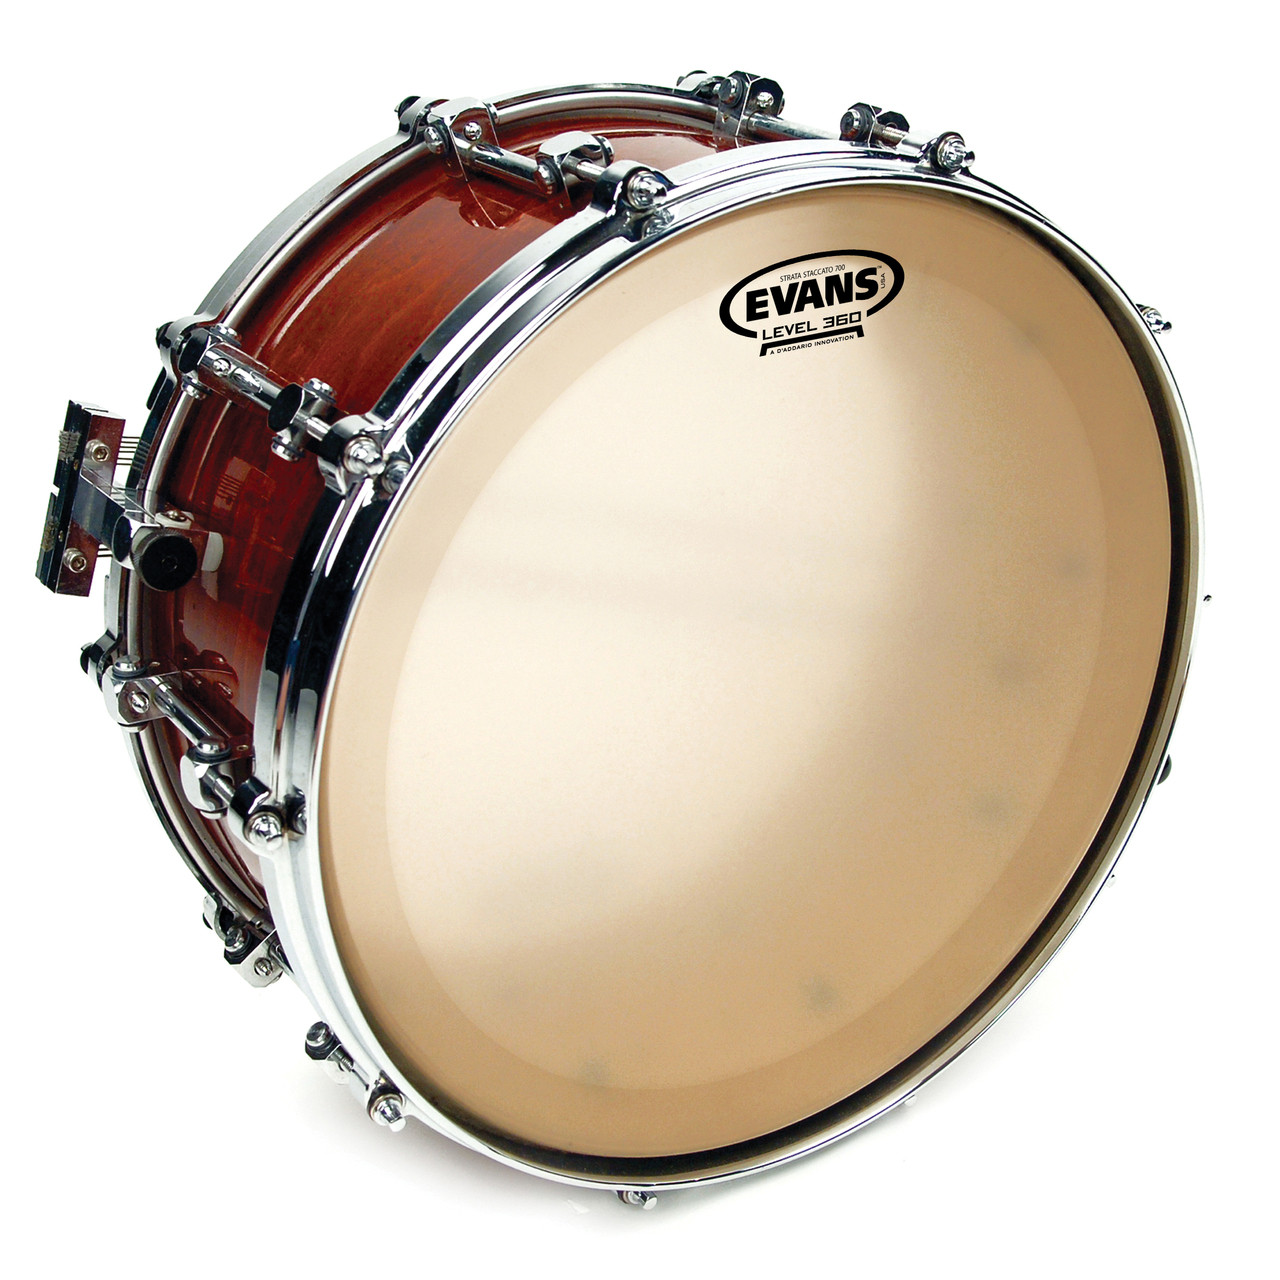 14 inch snare drum head